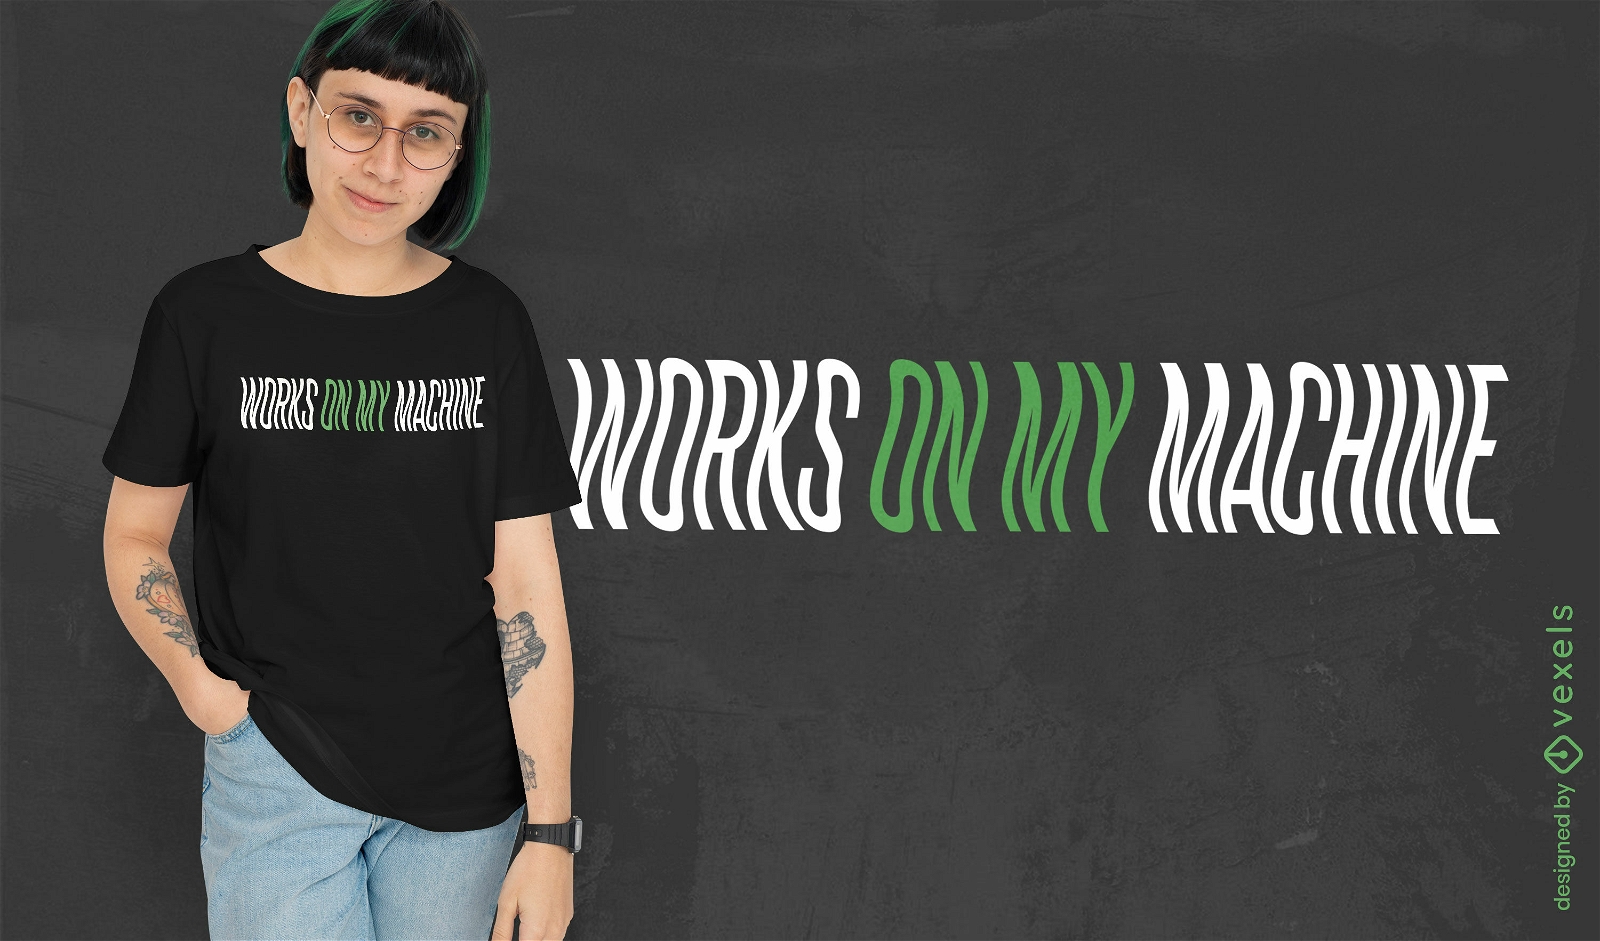 Wavy computer coding quote t-shirt design